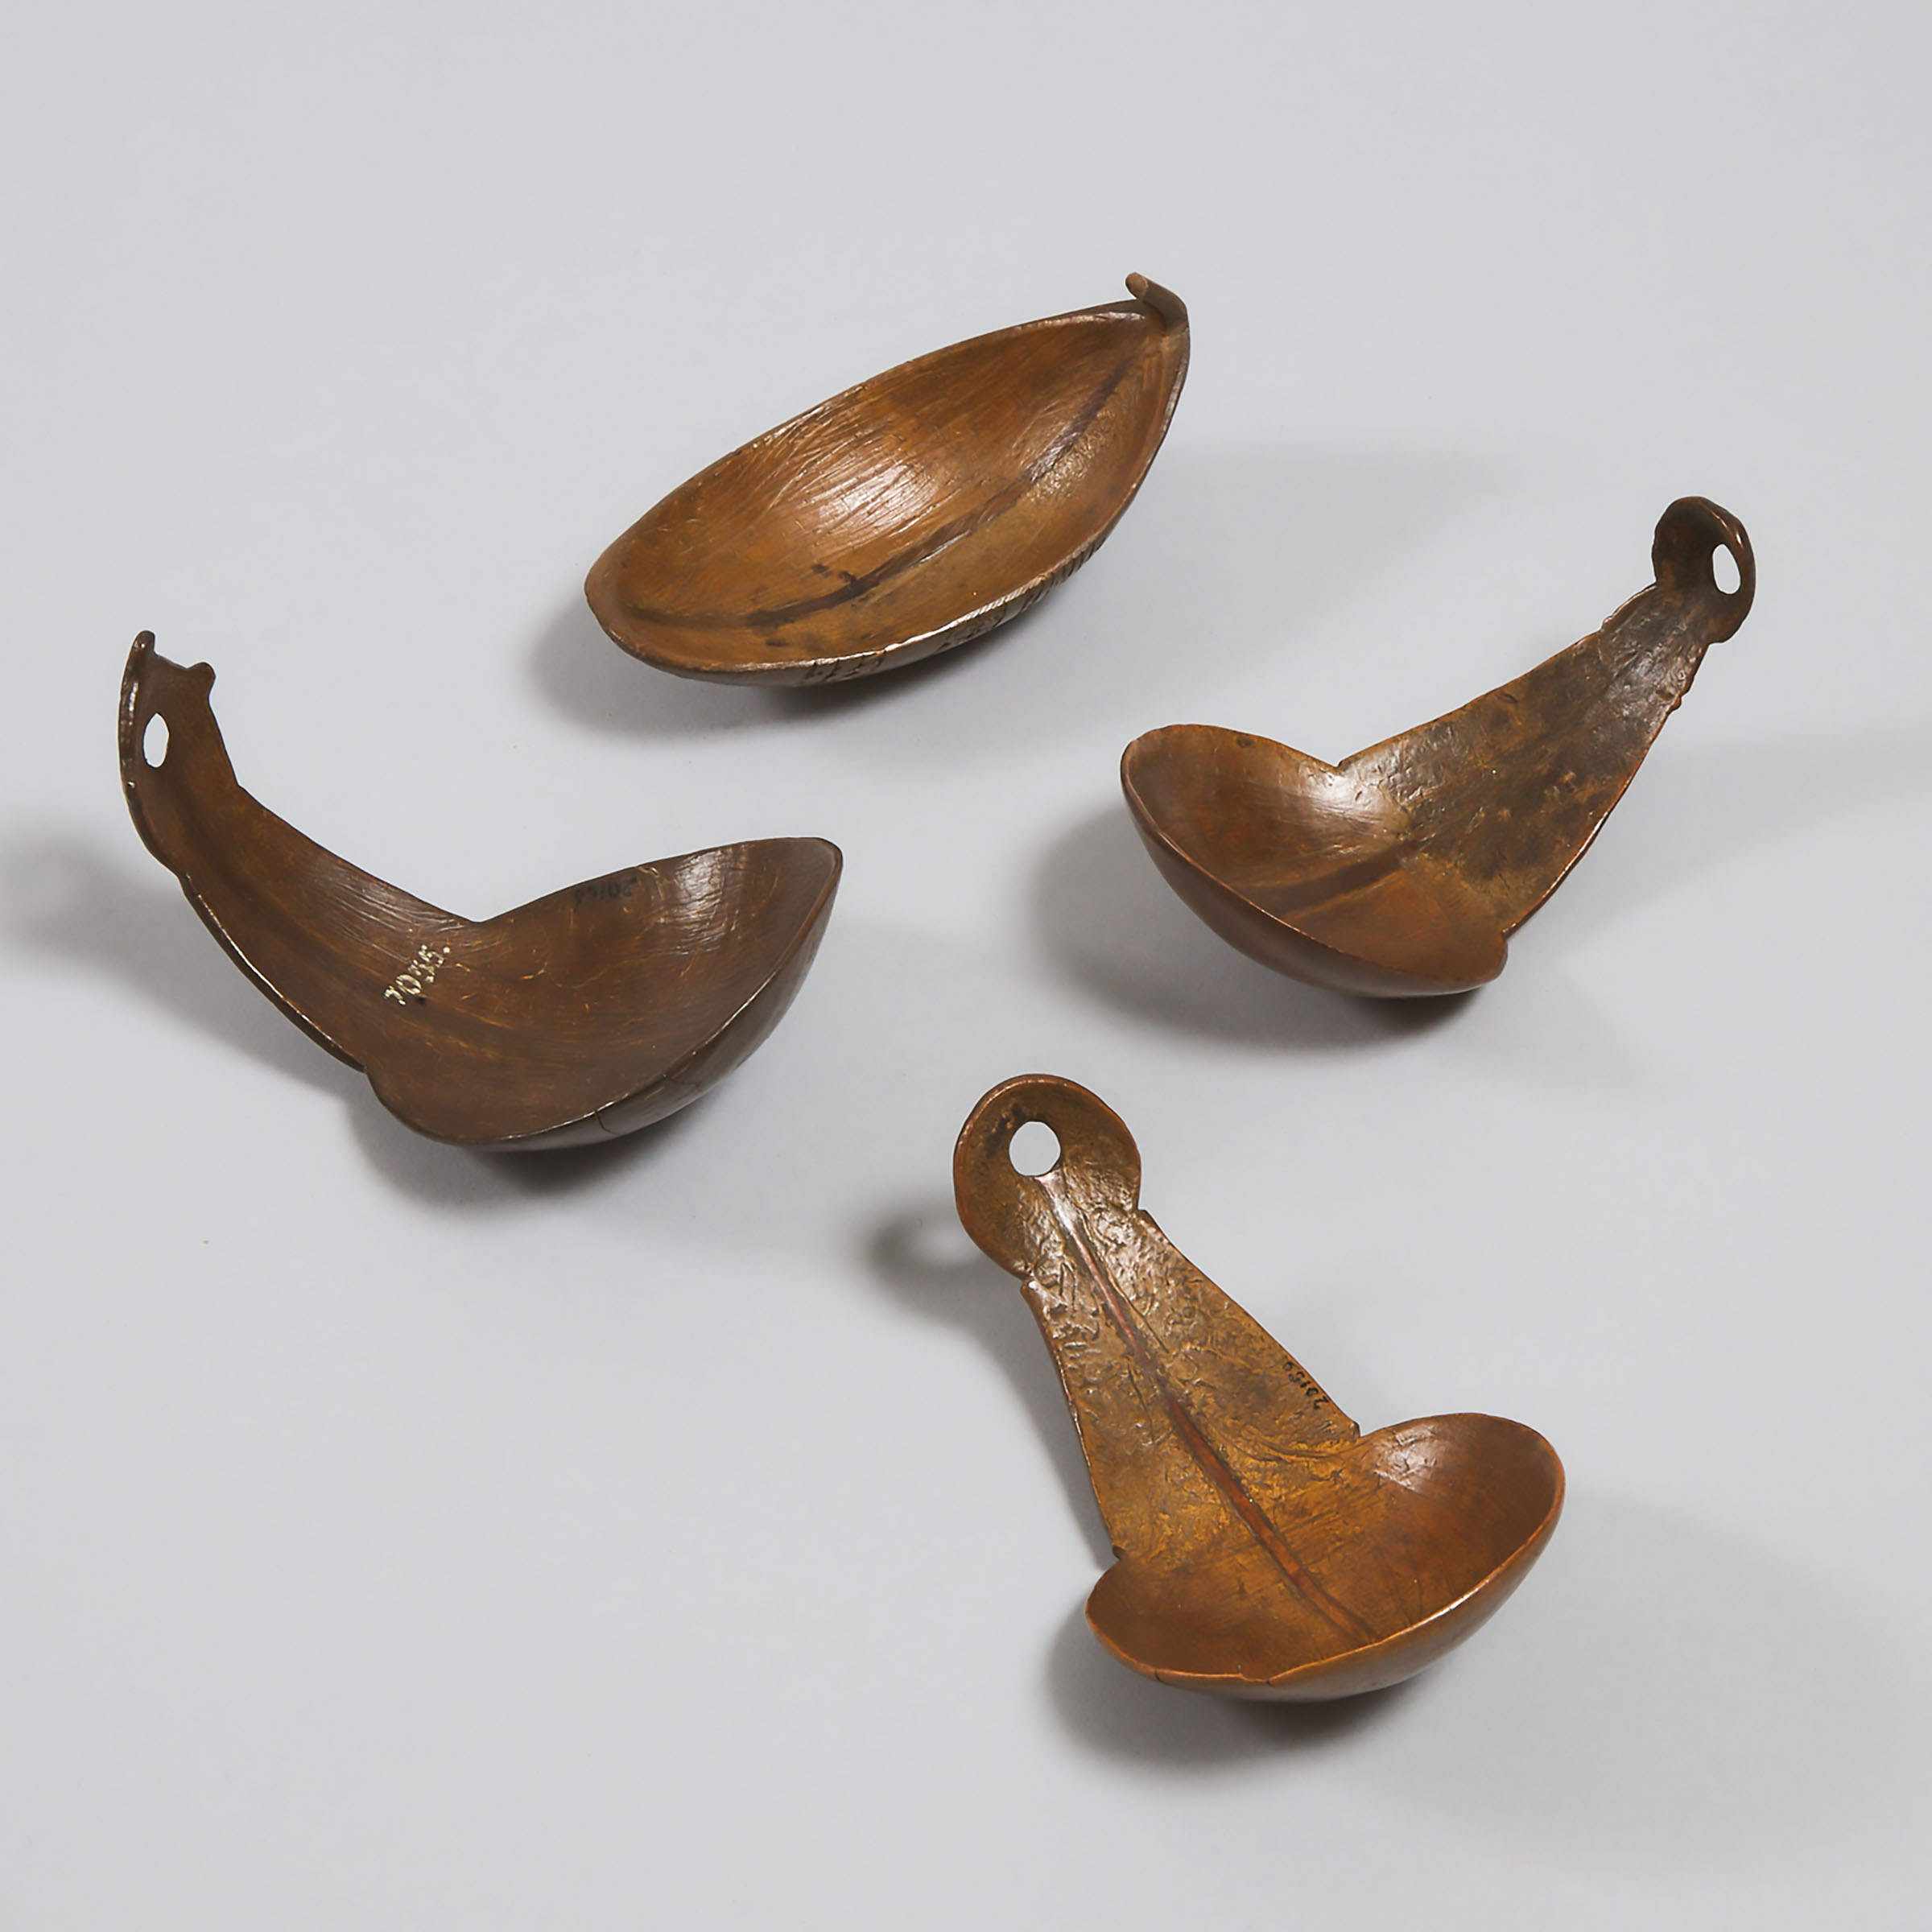 Four Namau Coconut Shell Spoons, Purari River, Papua New Guinea 19th/early 20th century